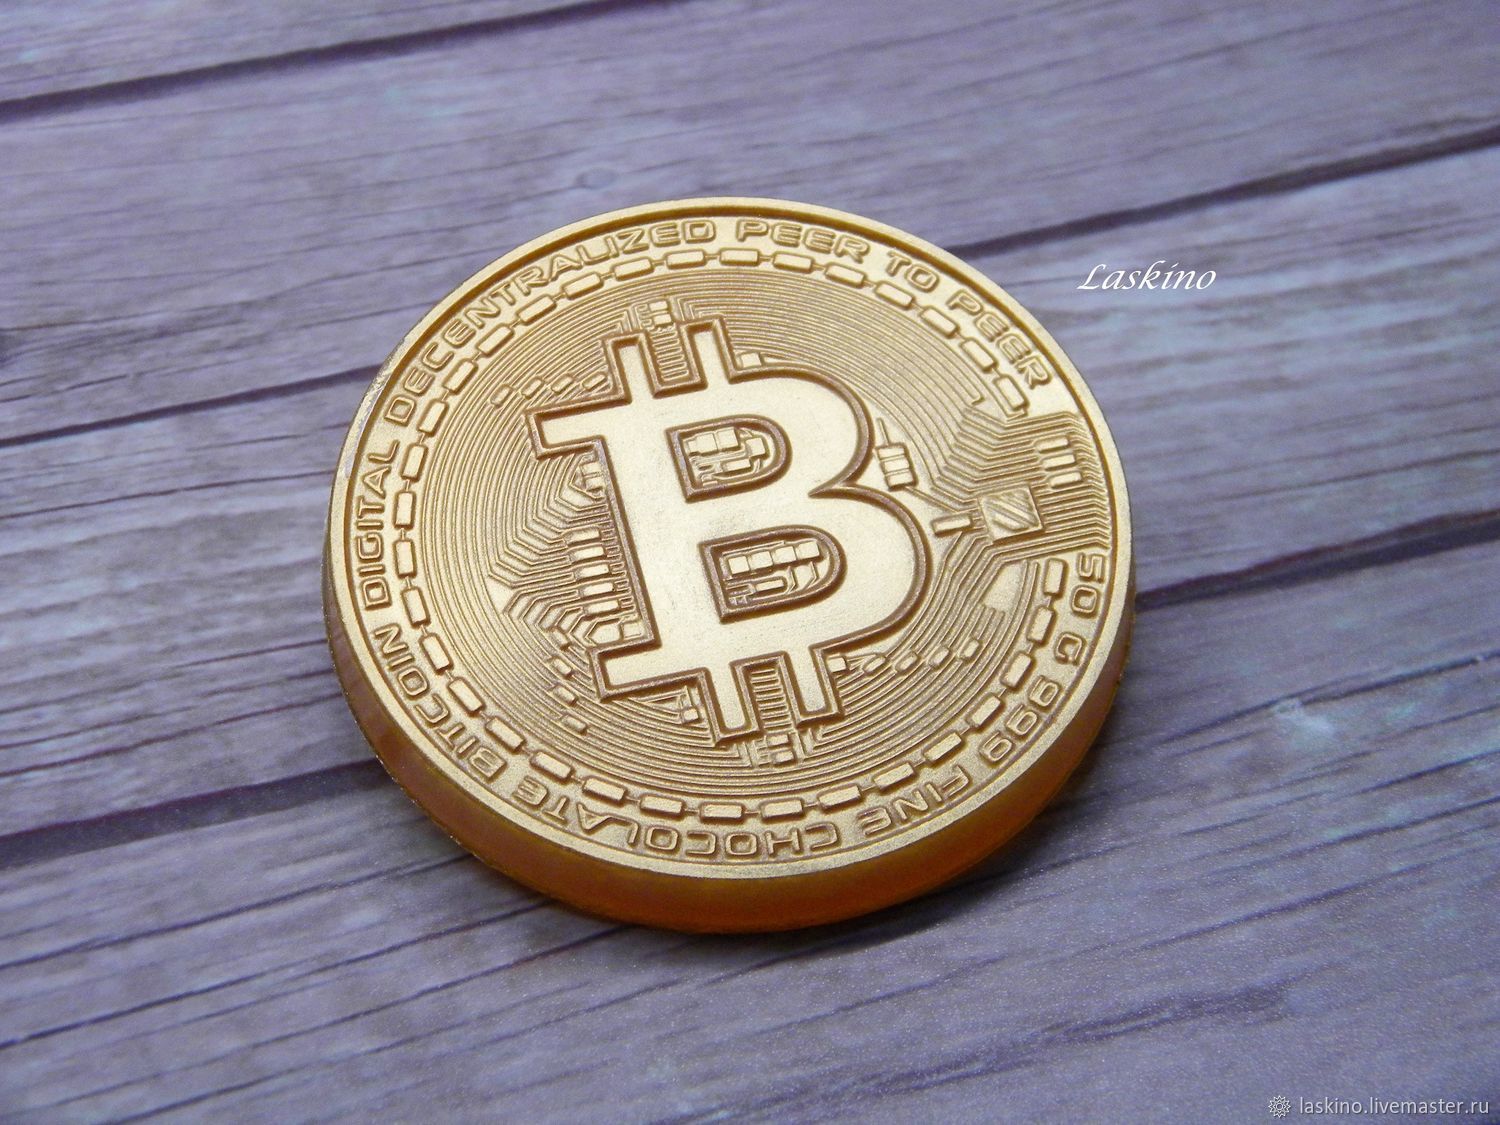 Обмен биткоин спб фунты bitcoin host